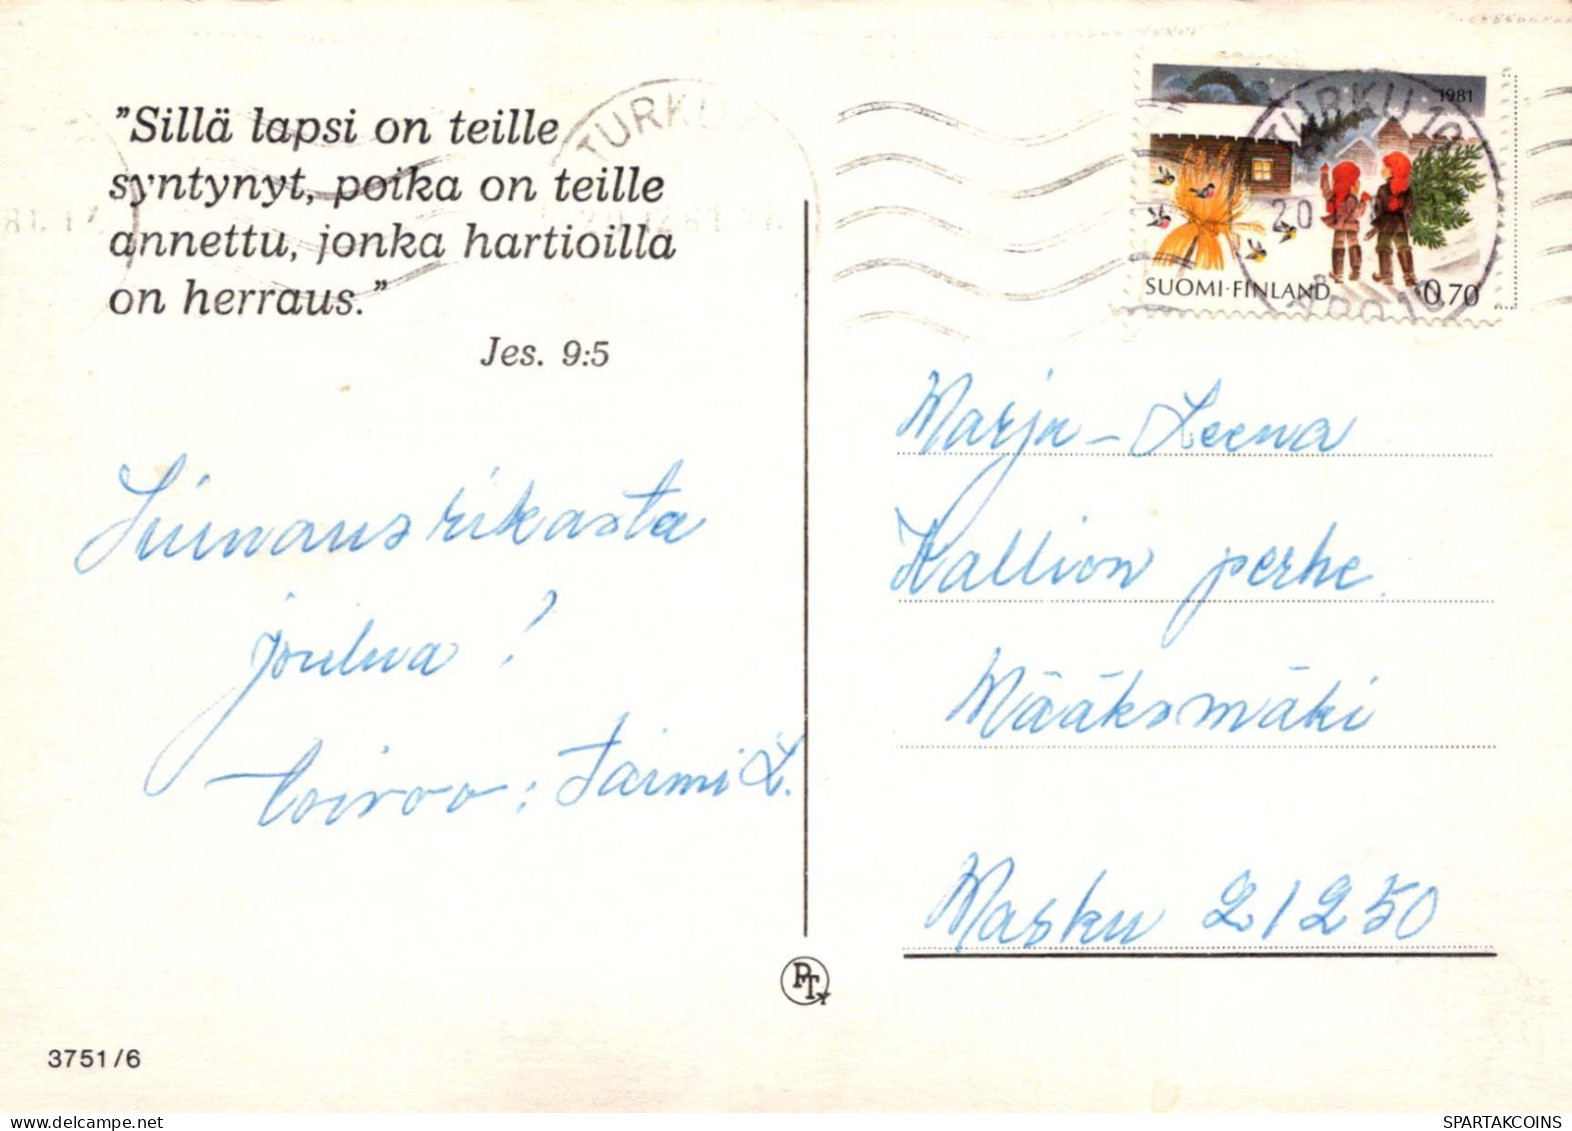 Vierge Marie Madone Bébé JÉSUS Noël Religion Vintage Carte Postale CPSM #PBB818.FR - Jungfräuliche Marie Und Madona